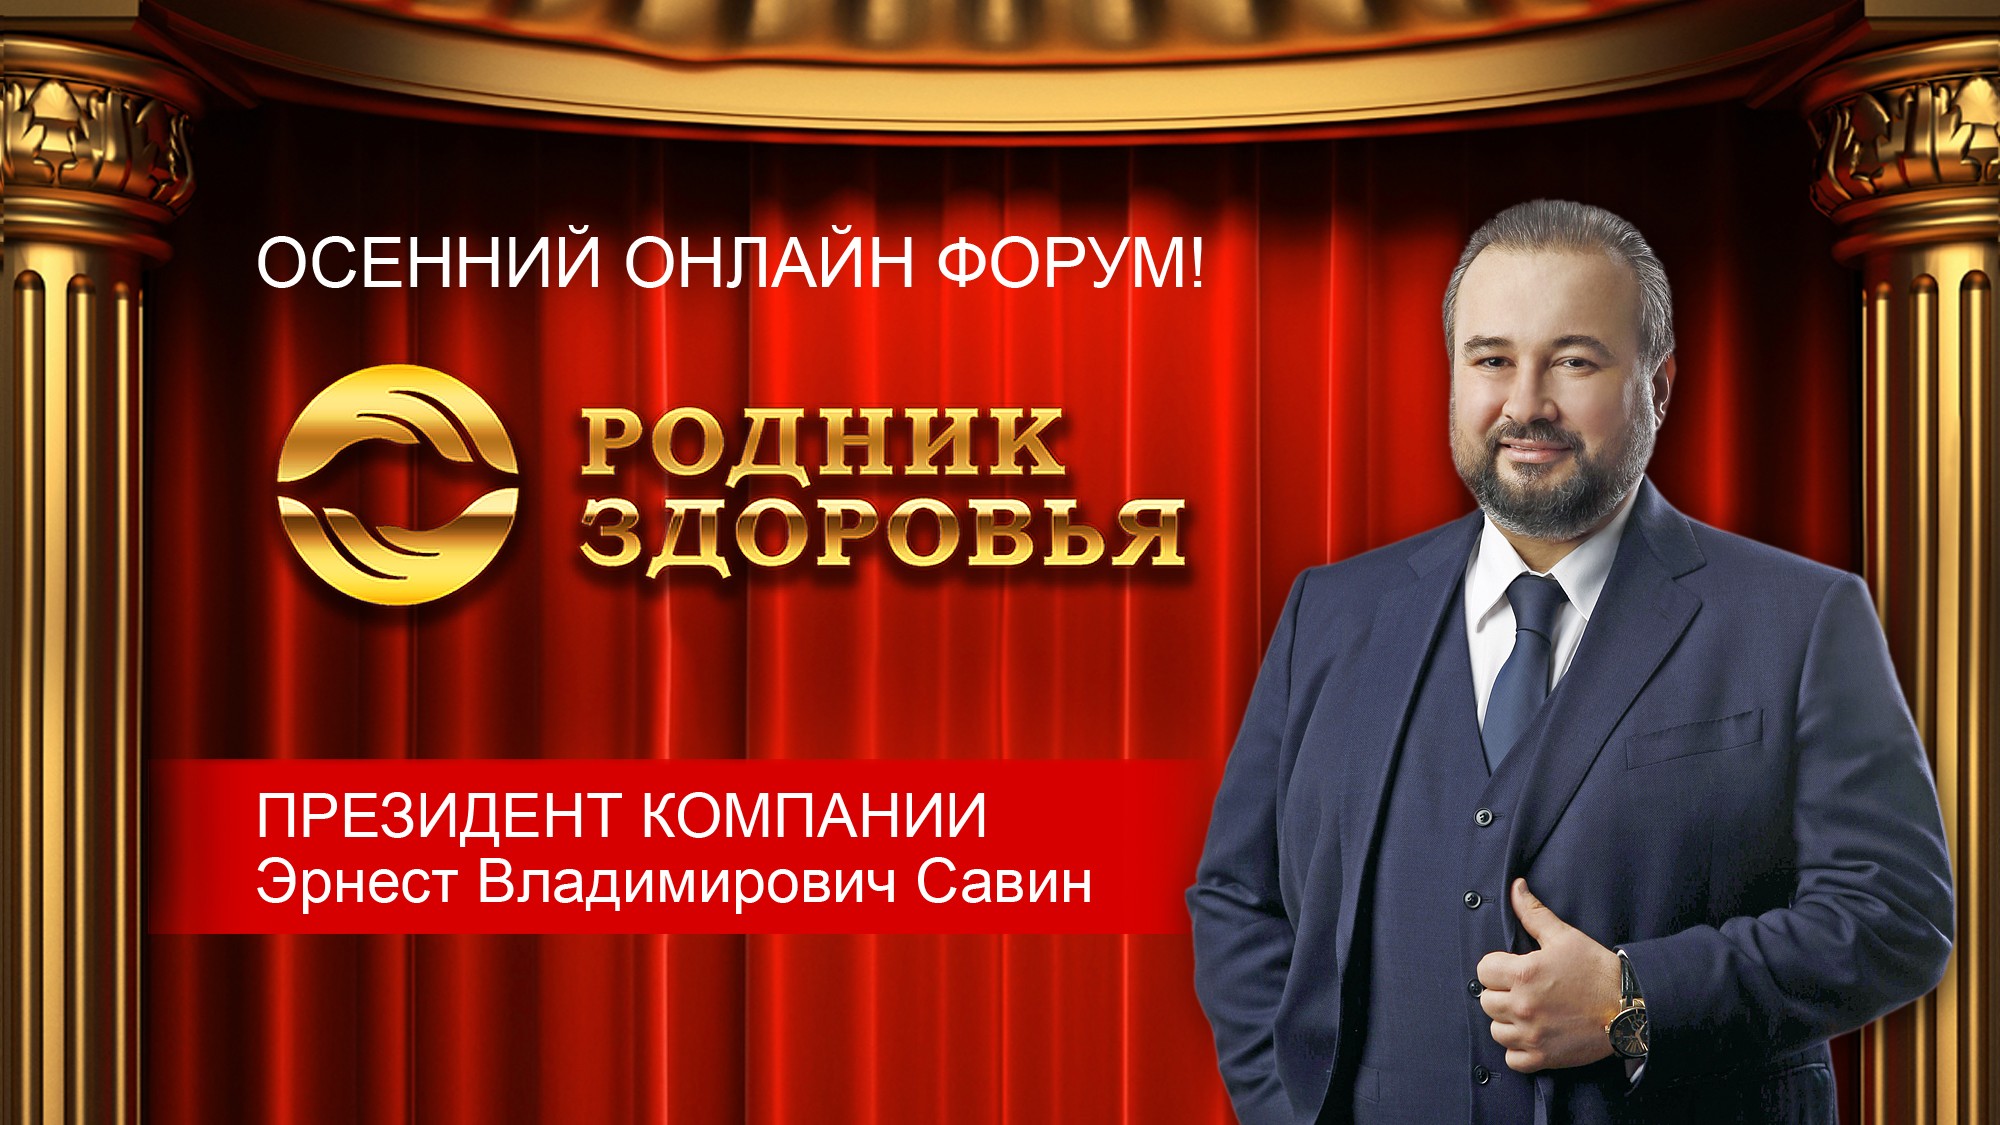 Выступление Президента компании Э.В. Савина на Осеннем онлайн форуме [Видео]